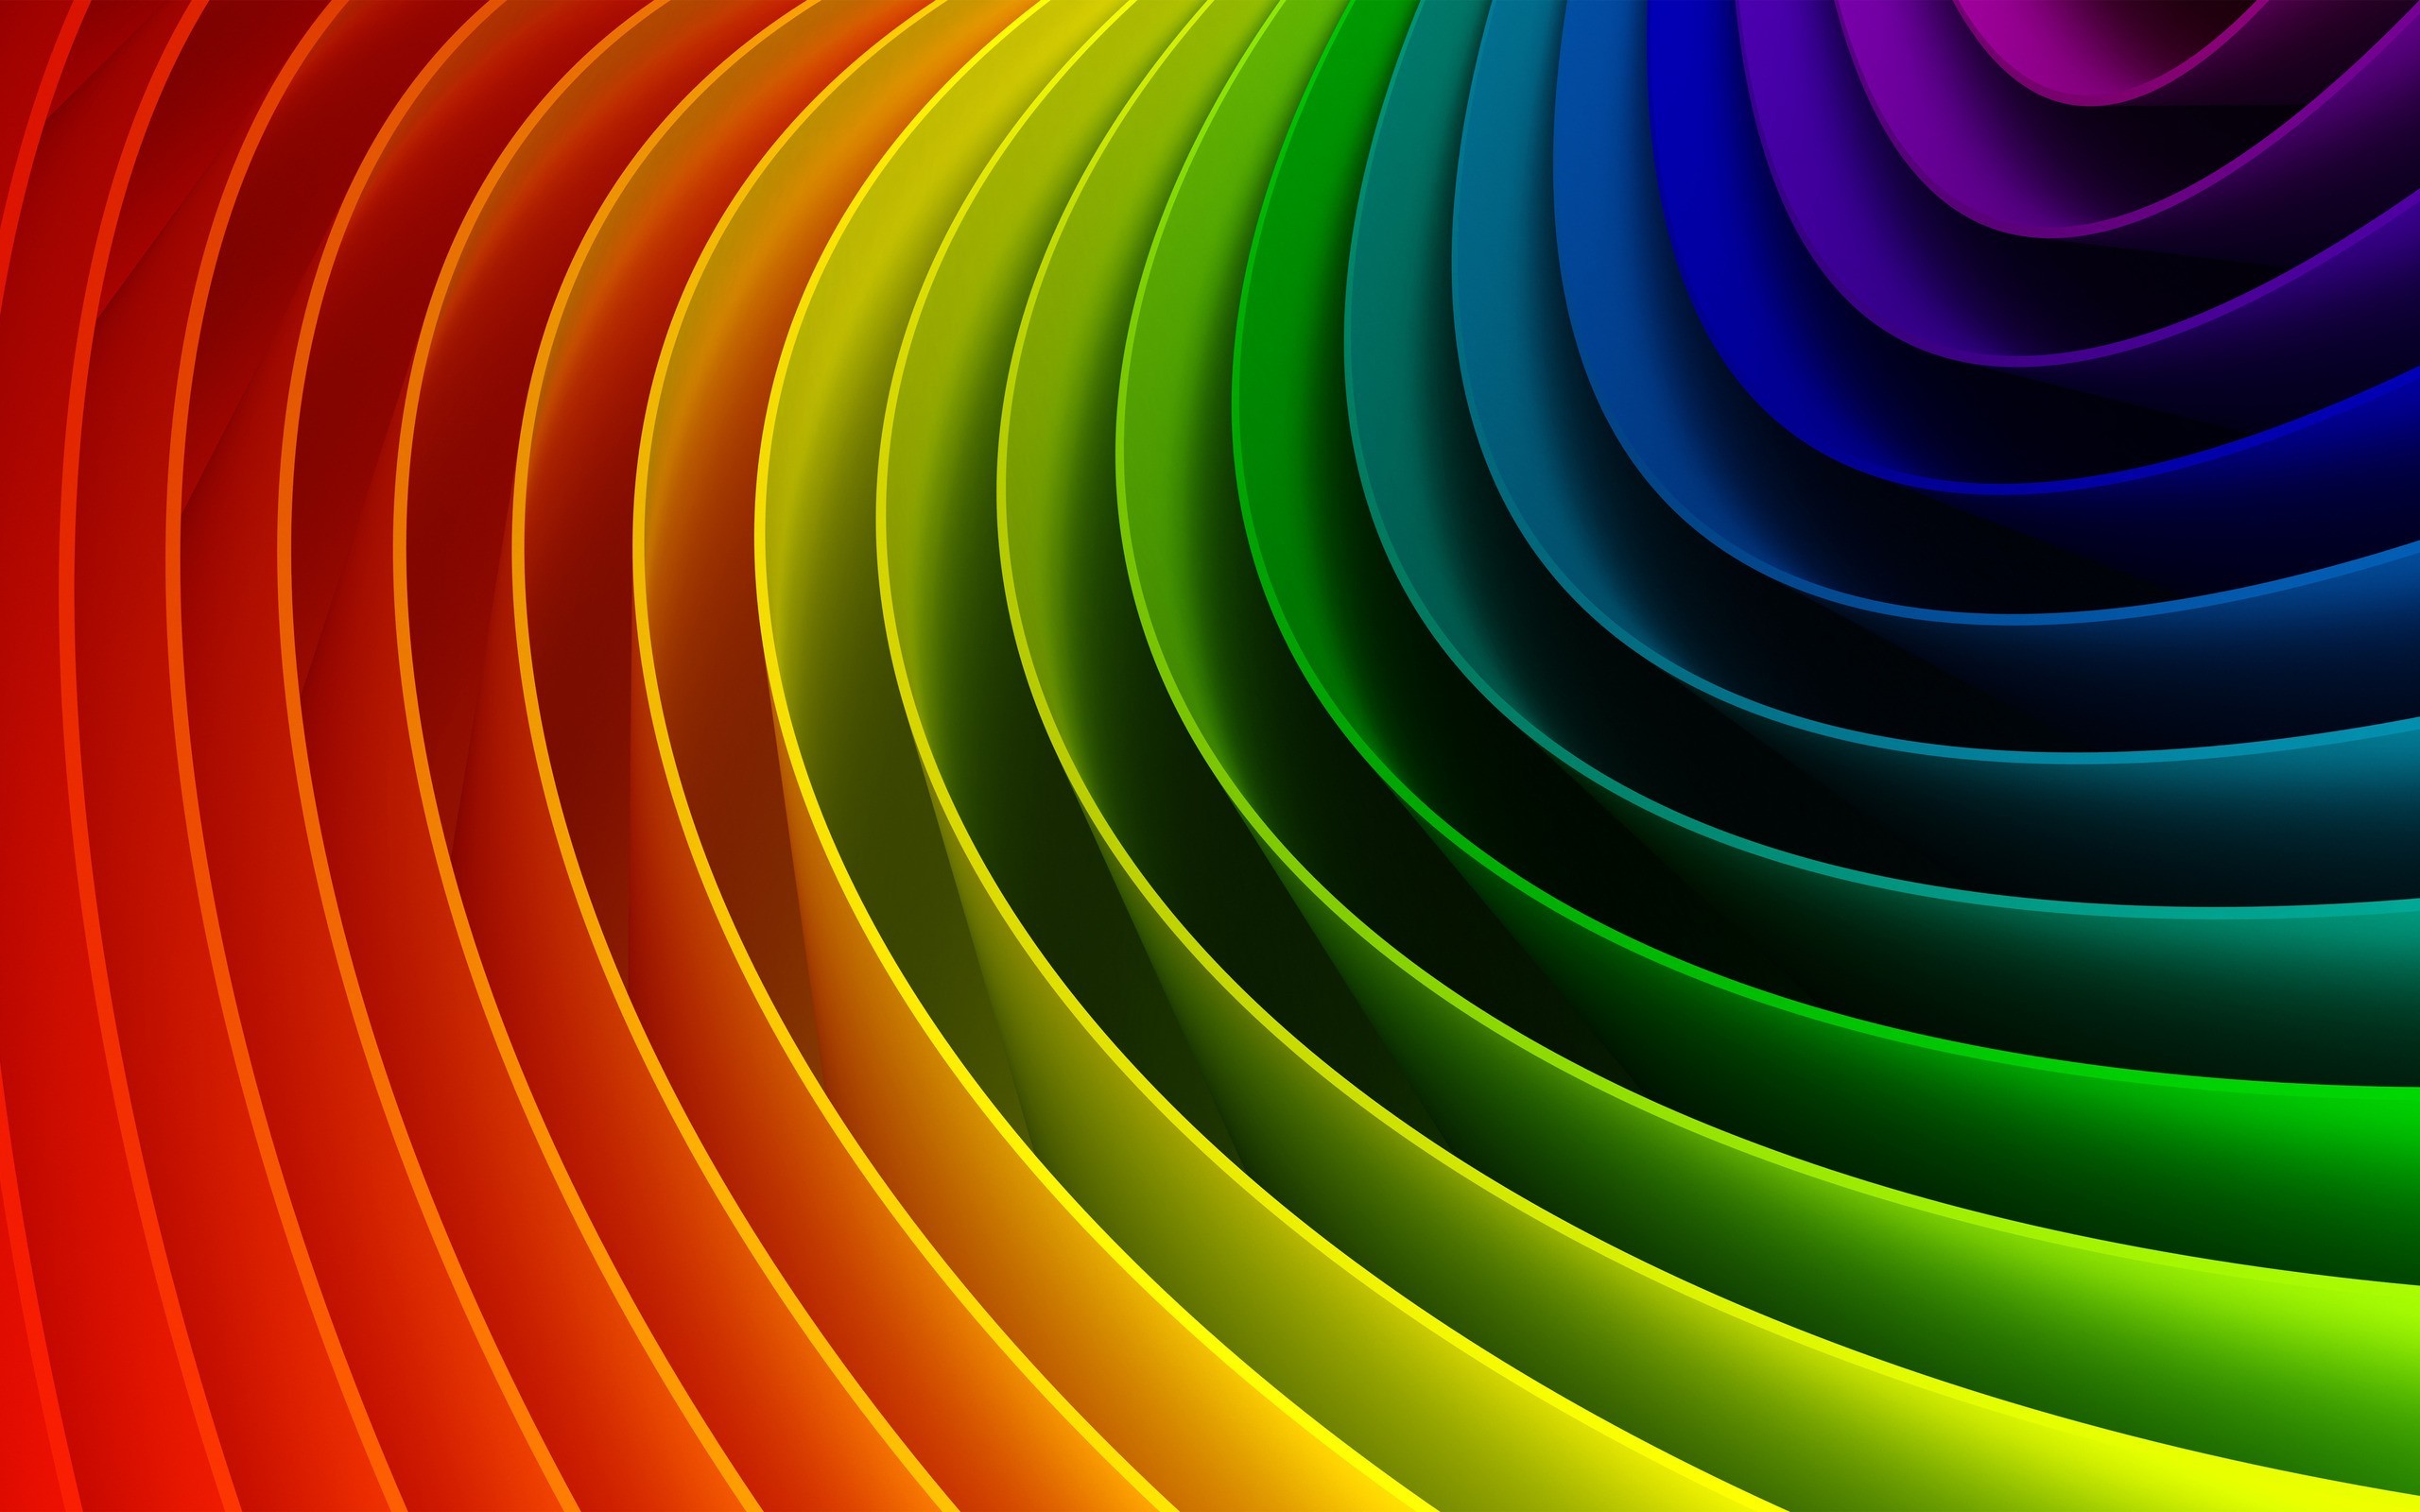  Rainbow wallpaper Colorful Rainbow hd wallpaper background desktop